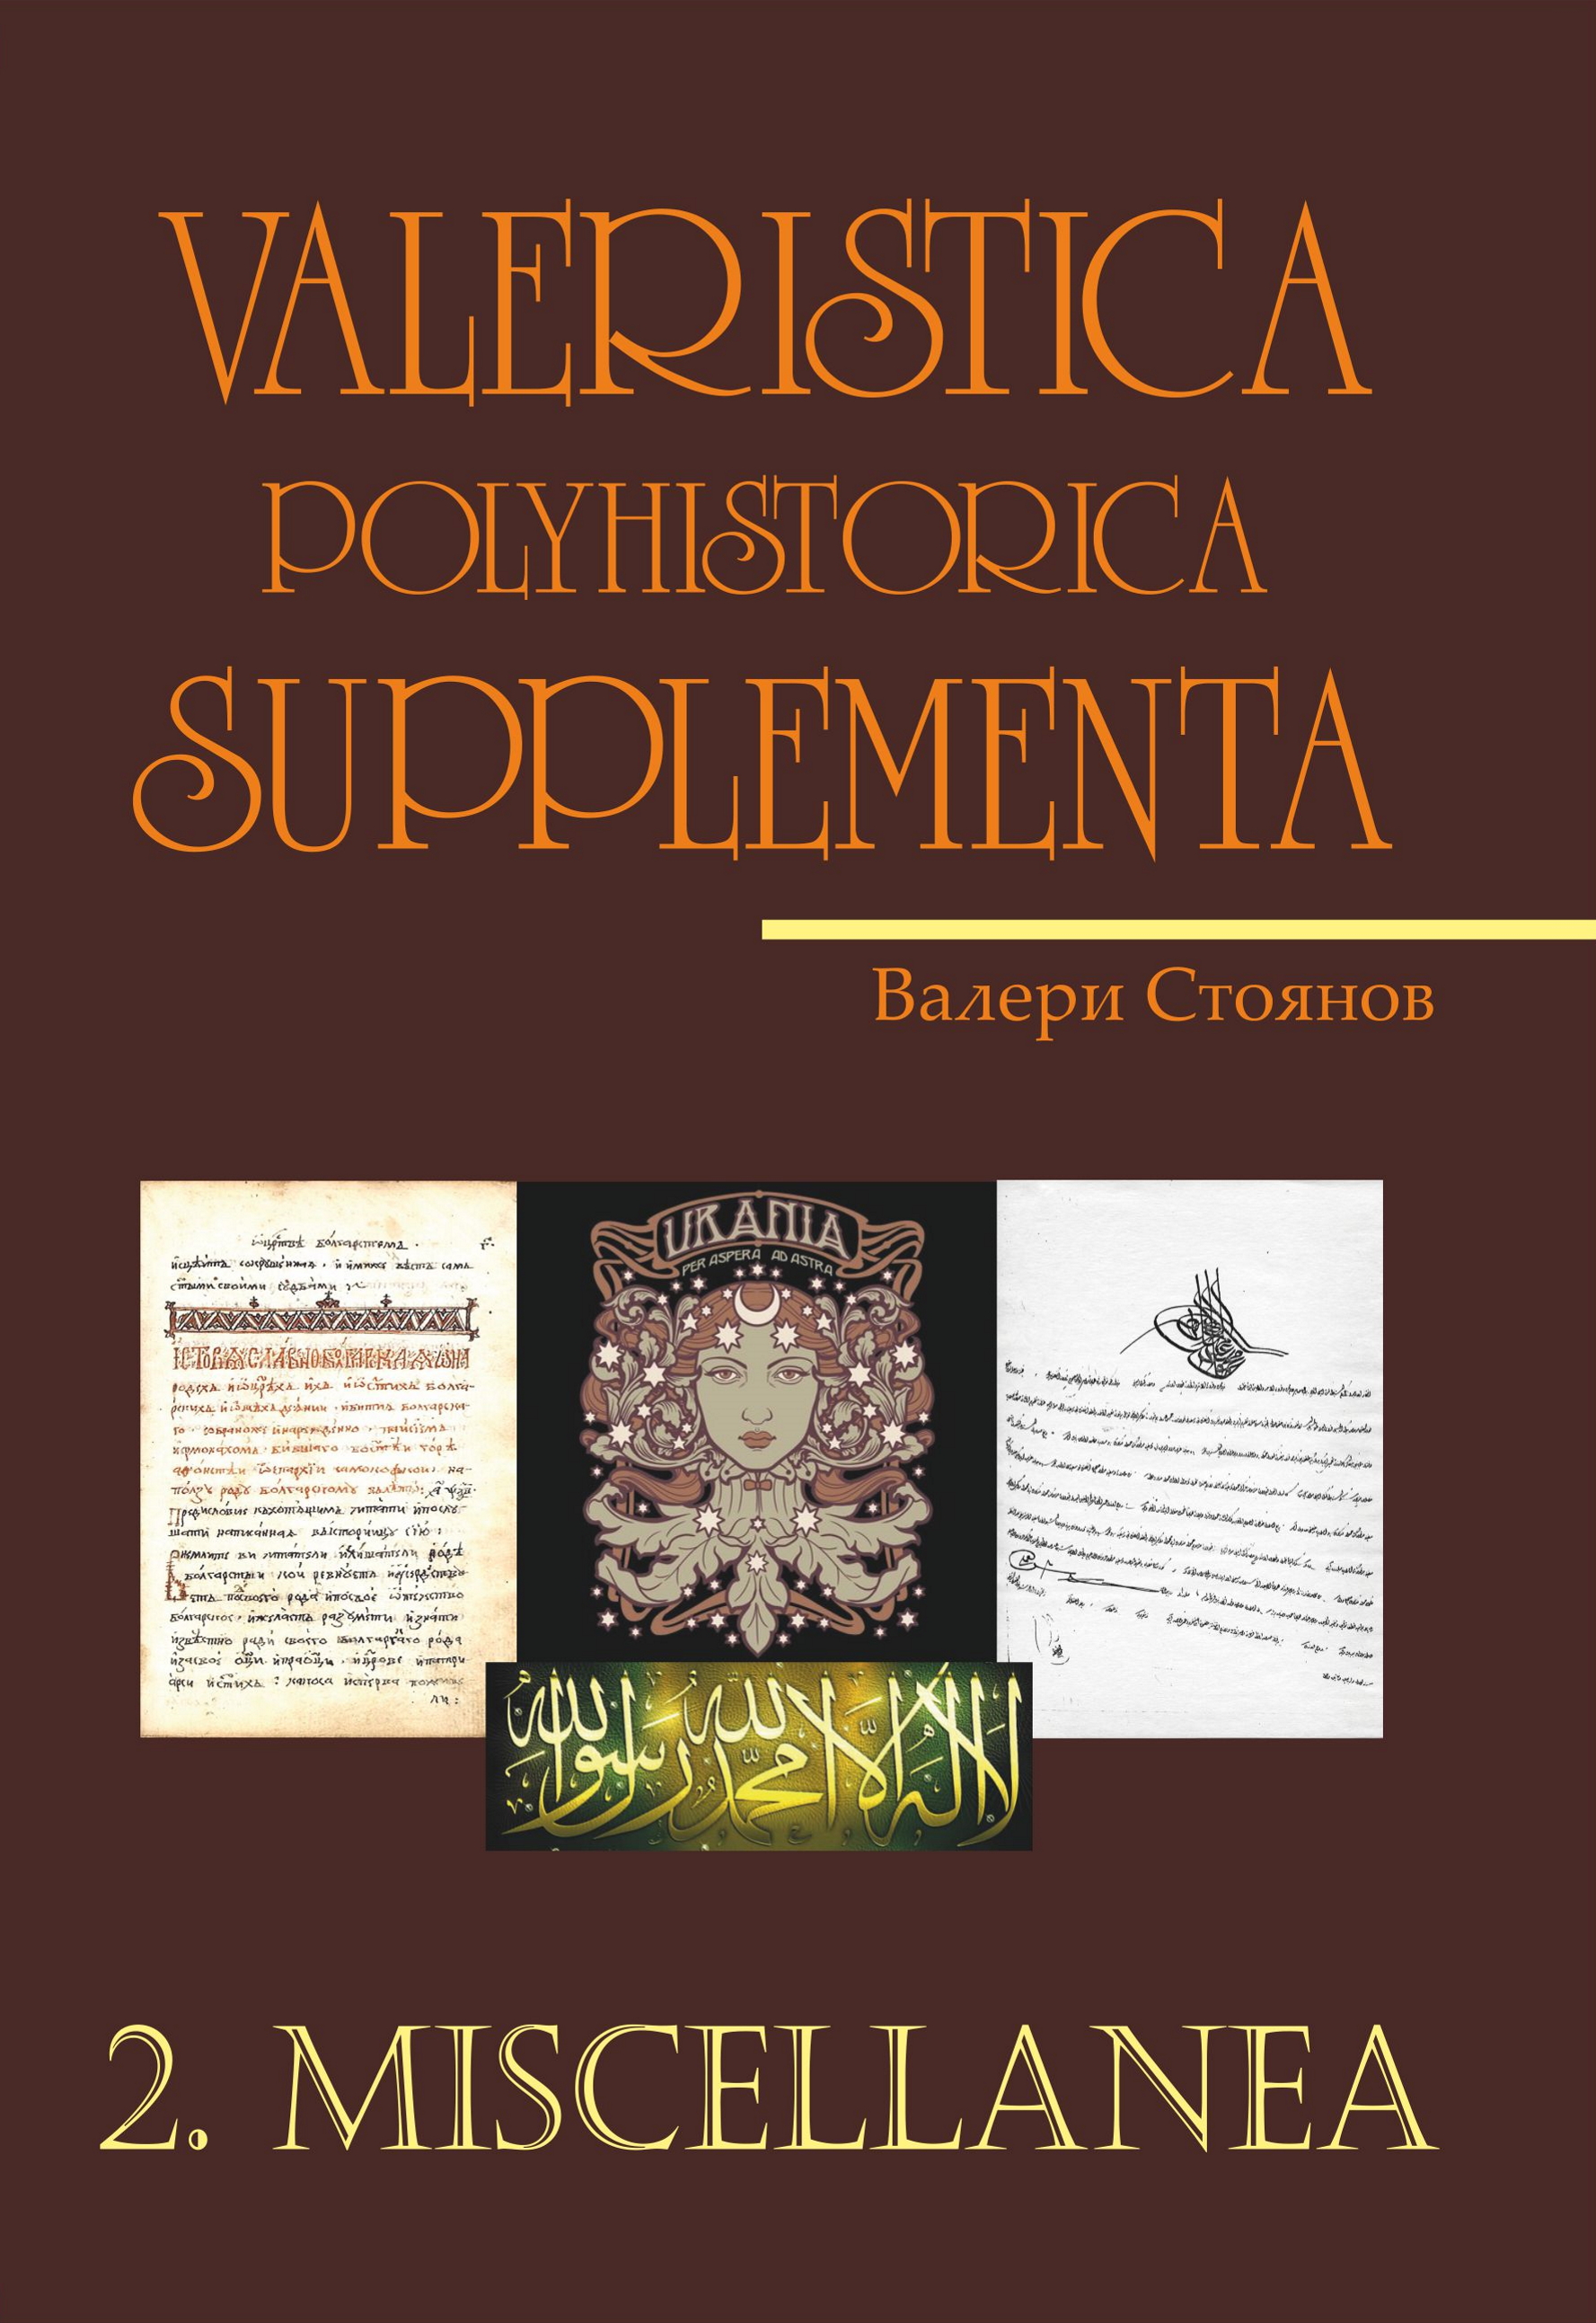 Valeristica Polyhistorica Supplementa, 2